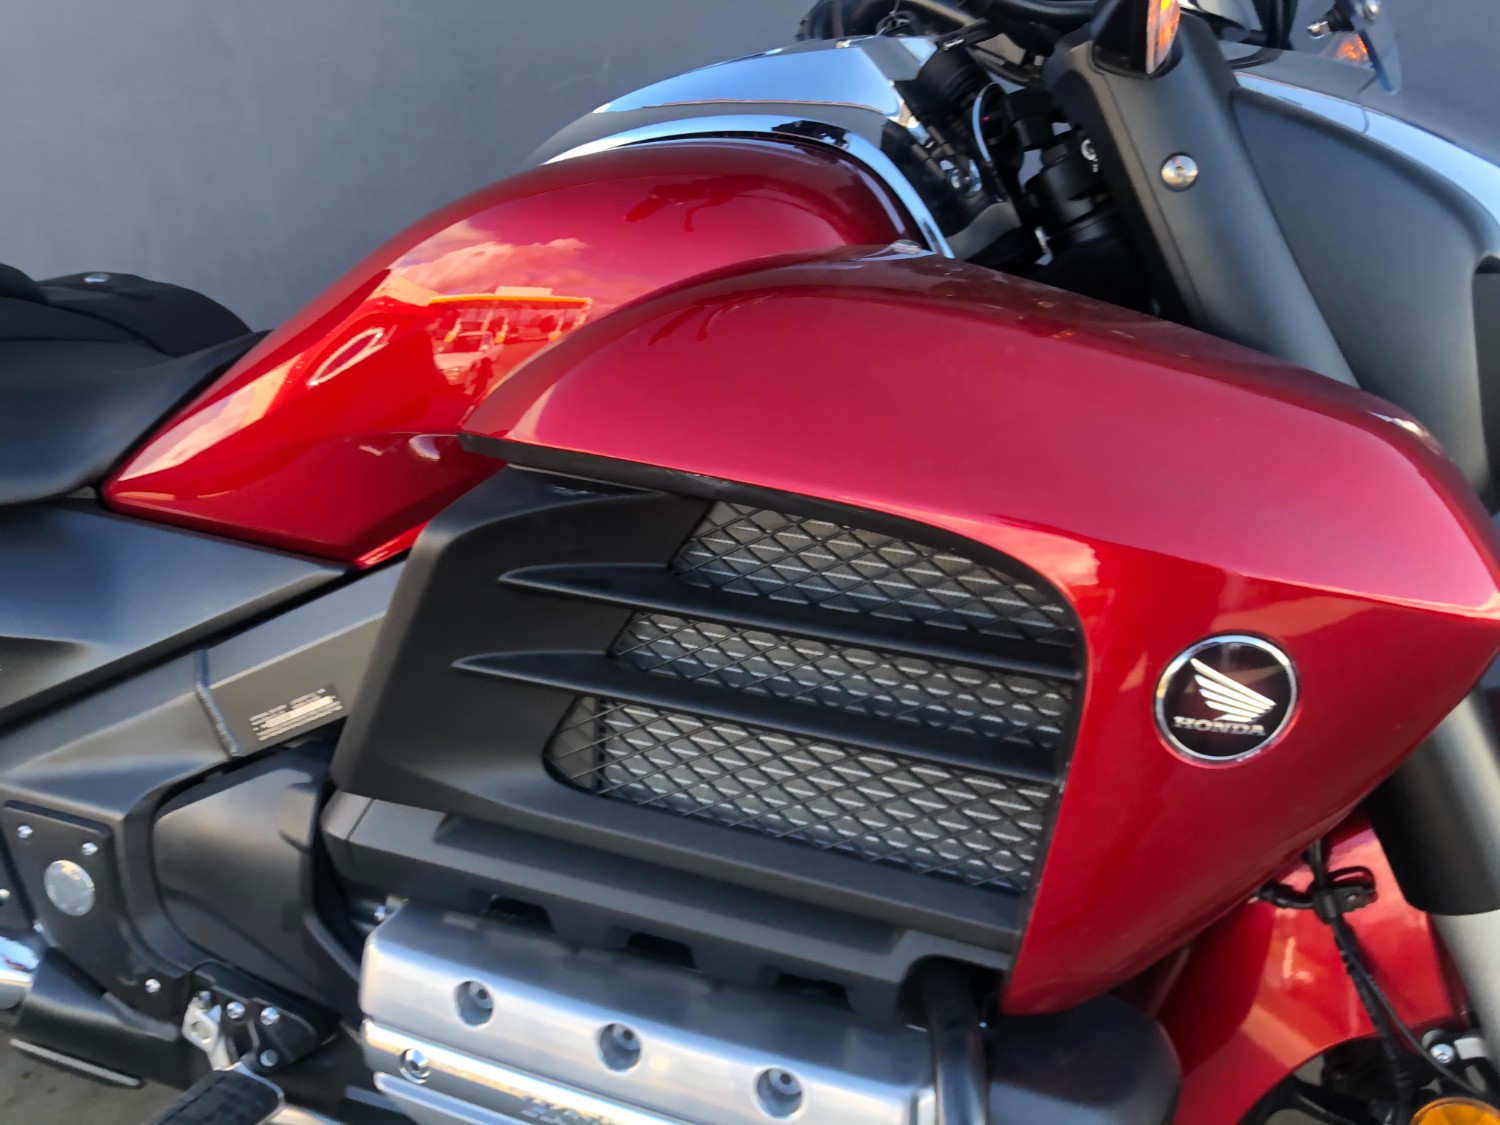 2015 Honda Valkyrie 1800cc GL1800C Motorcycle Image 20